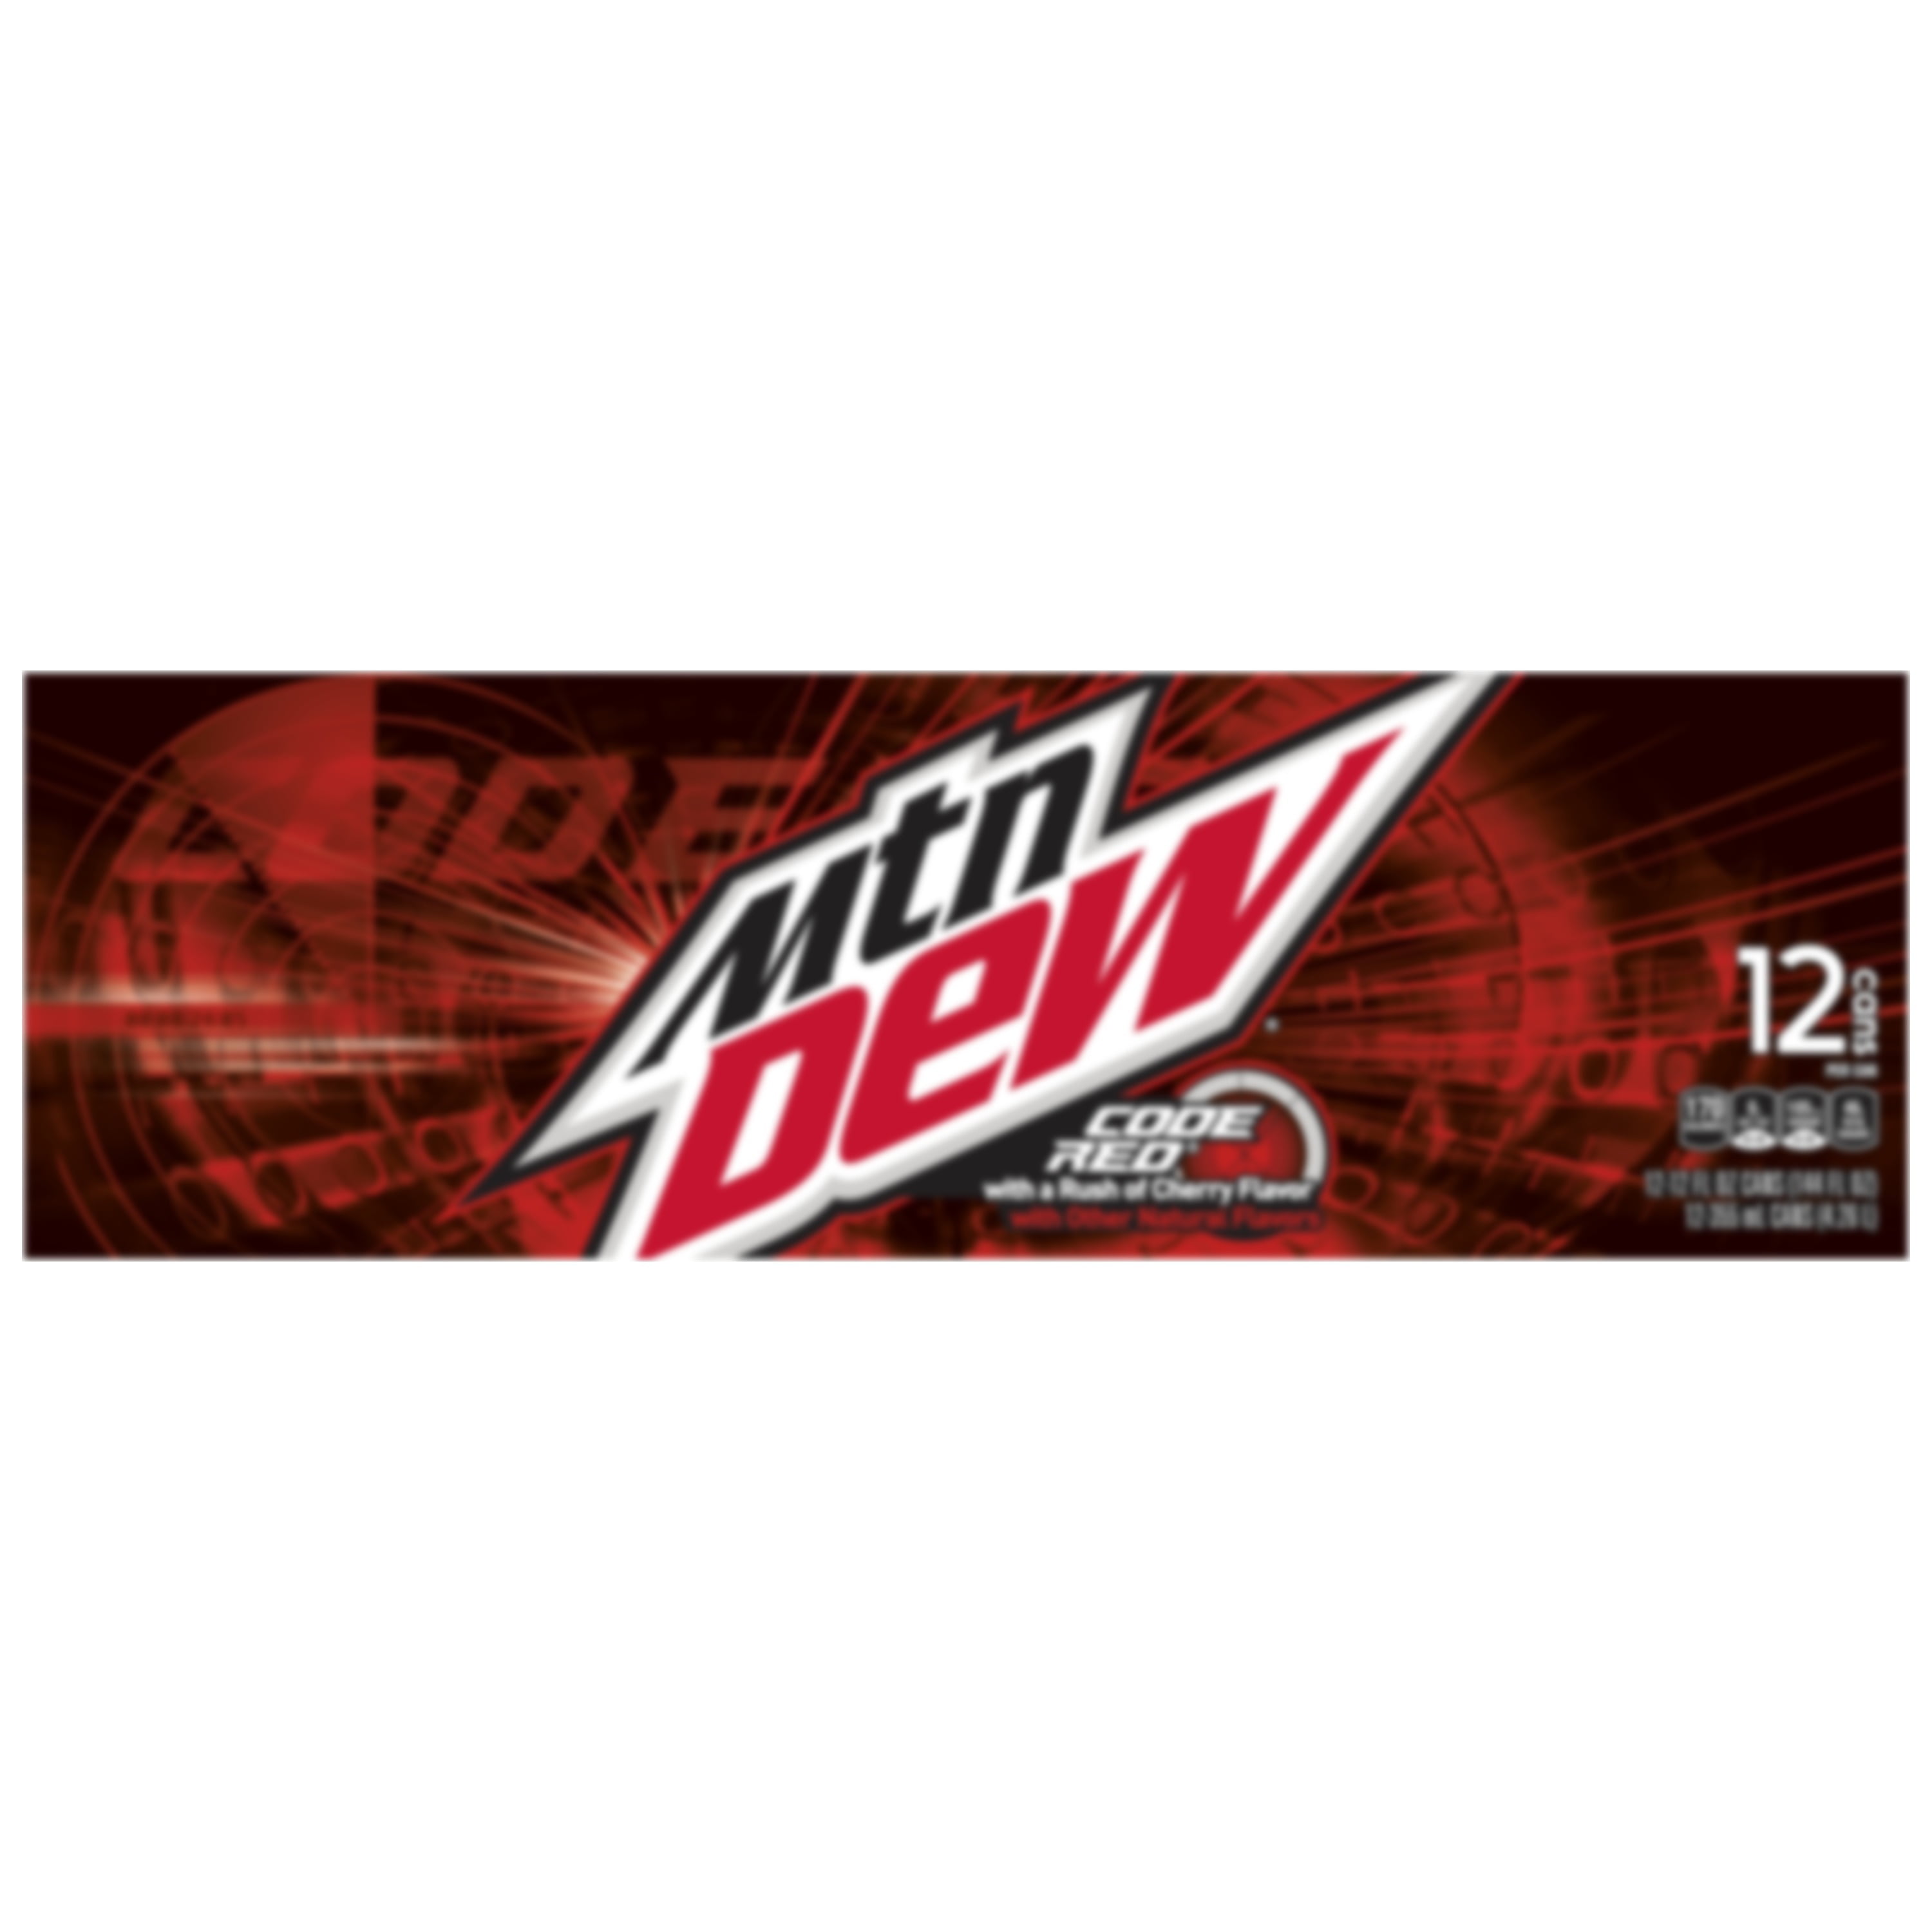 Mountain Dew Code Red Soda 12 Fl Oz Cans 12 Count Walmart Com Walmart Com